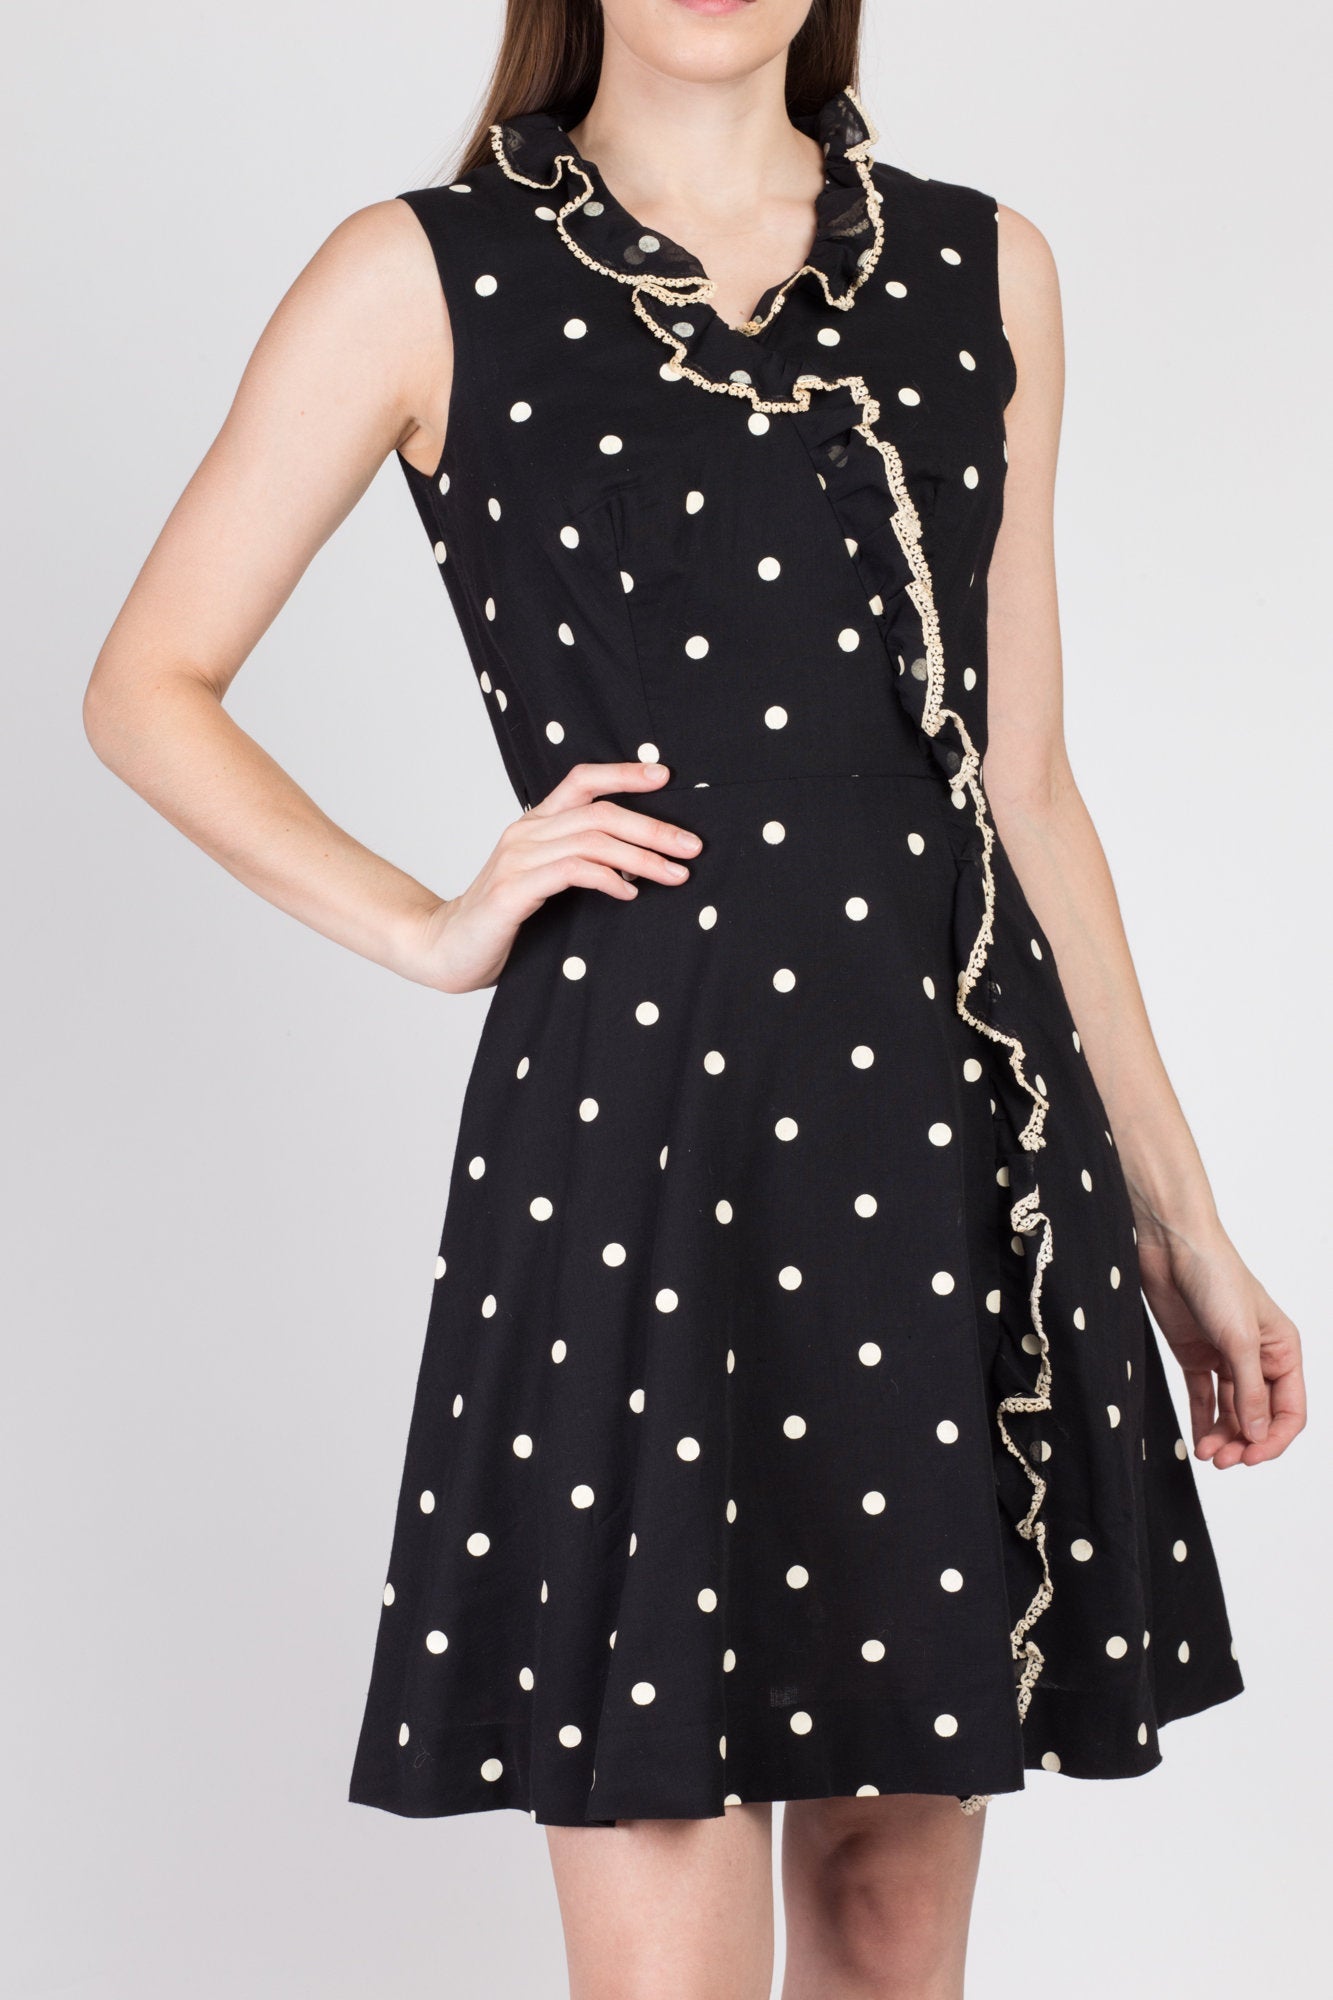 60s Black & White Polka Dot Dress - Extra Small